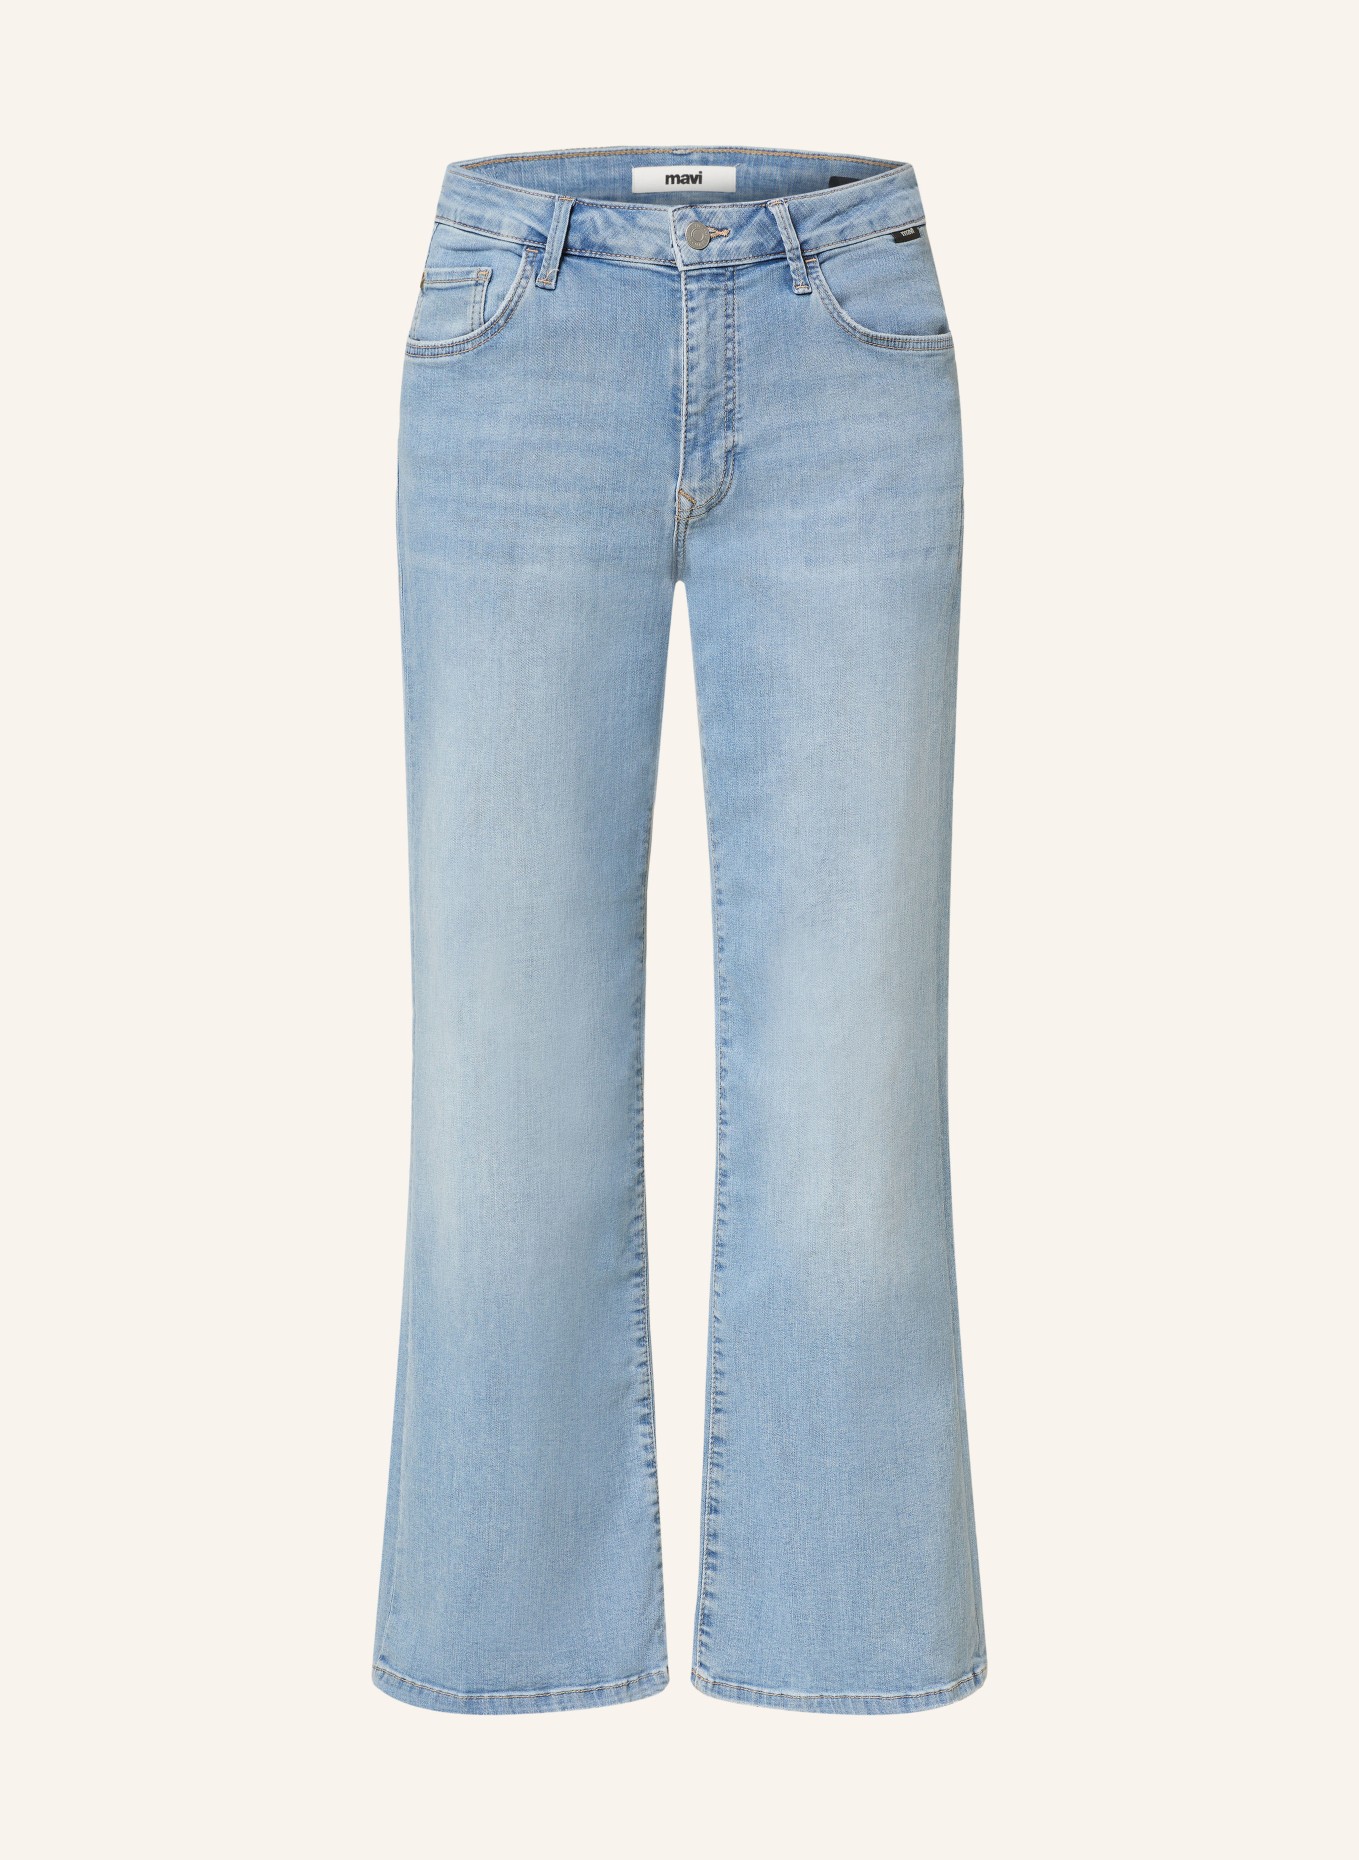 mavi Straight Jeans IBIZA, Farbe: 86879 mid brushed str (Bild 1)